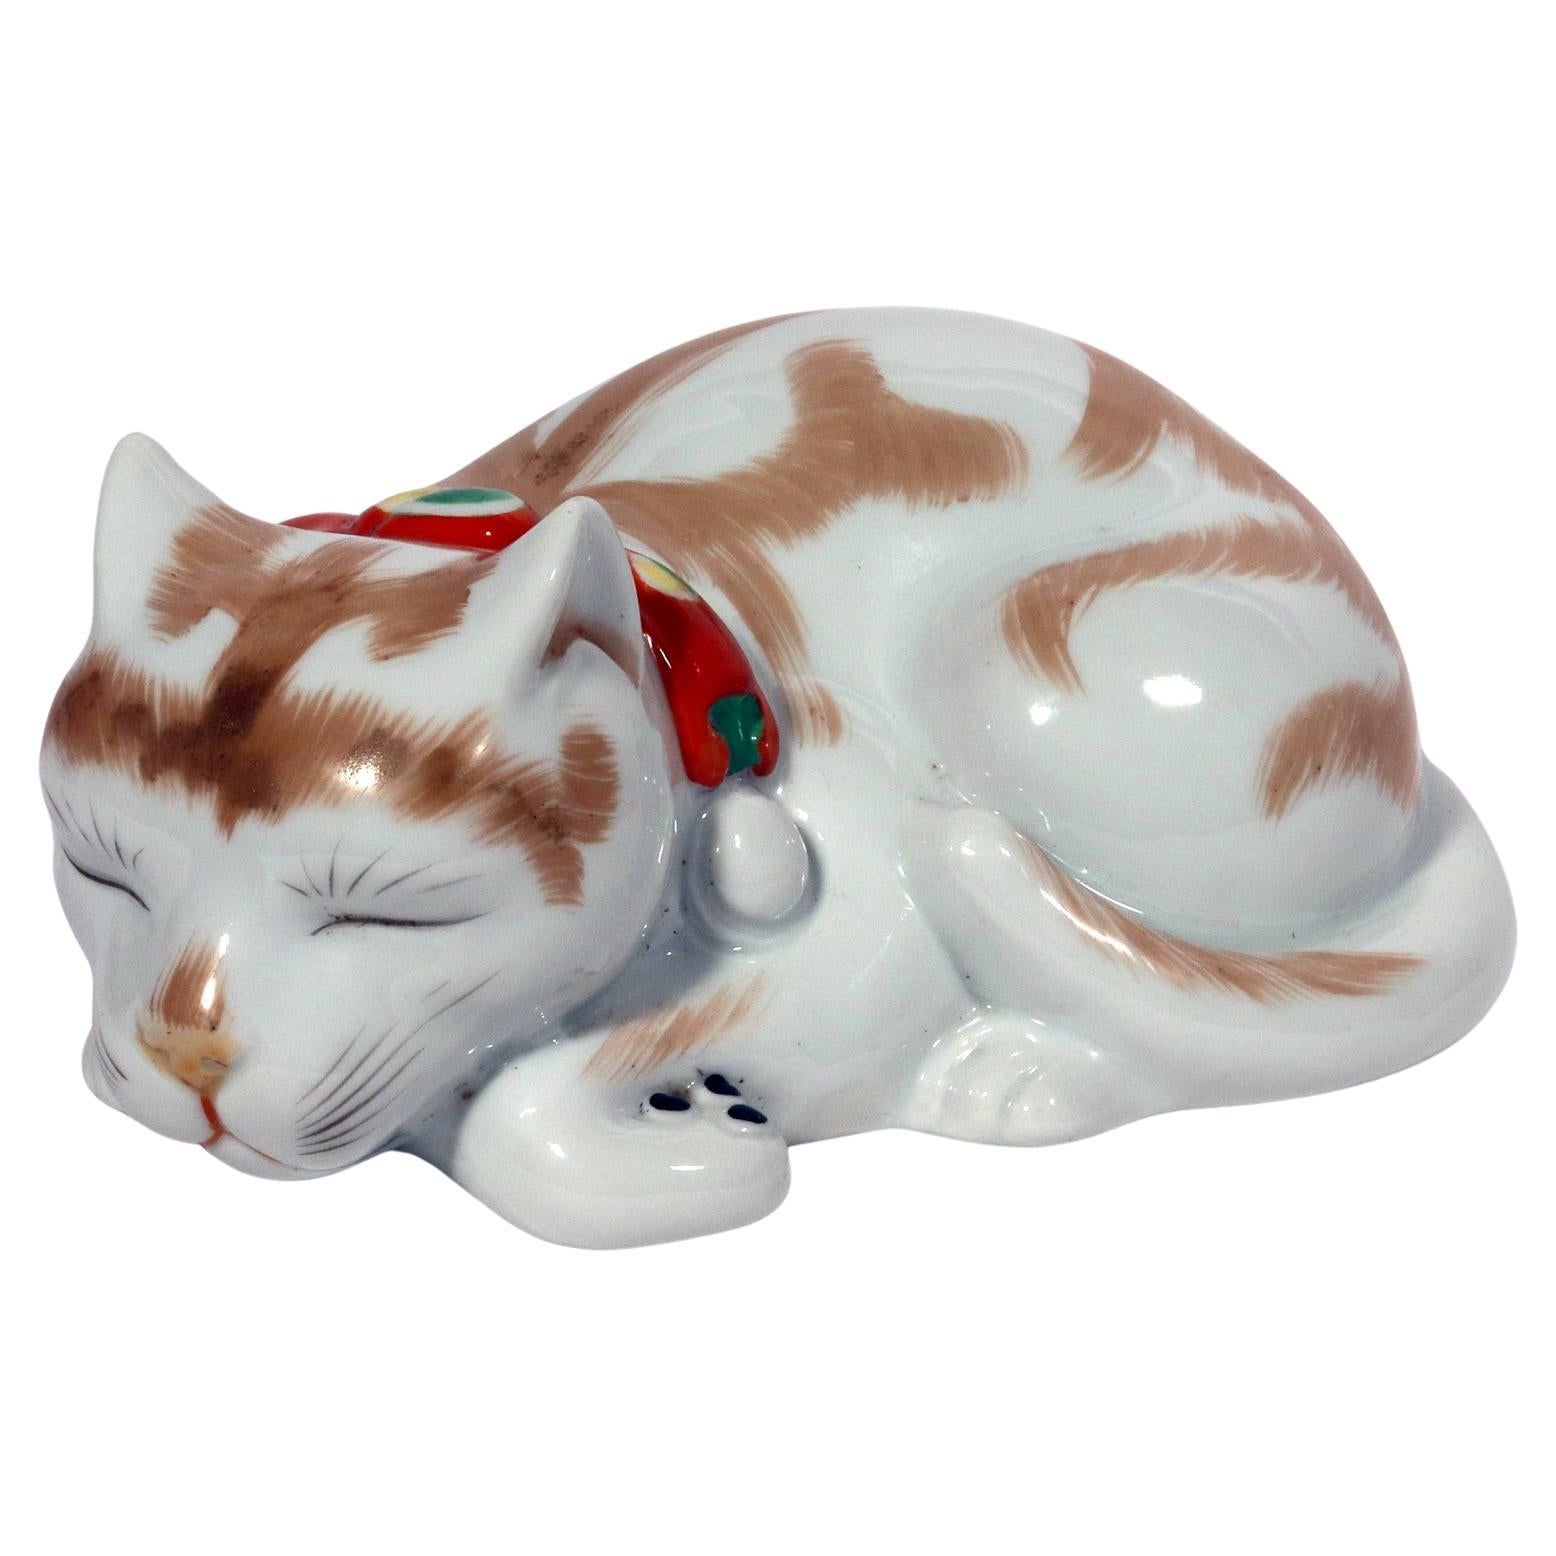 Japanese Kutani Porcelain Figure of a Sleeping Cat For Sale